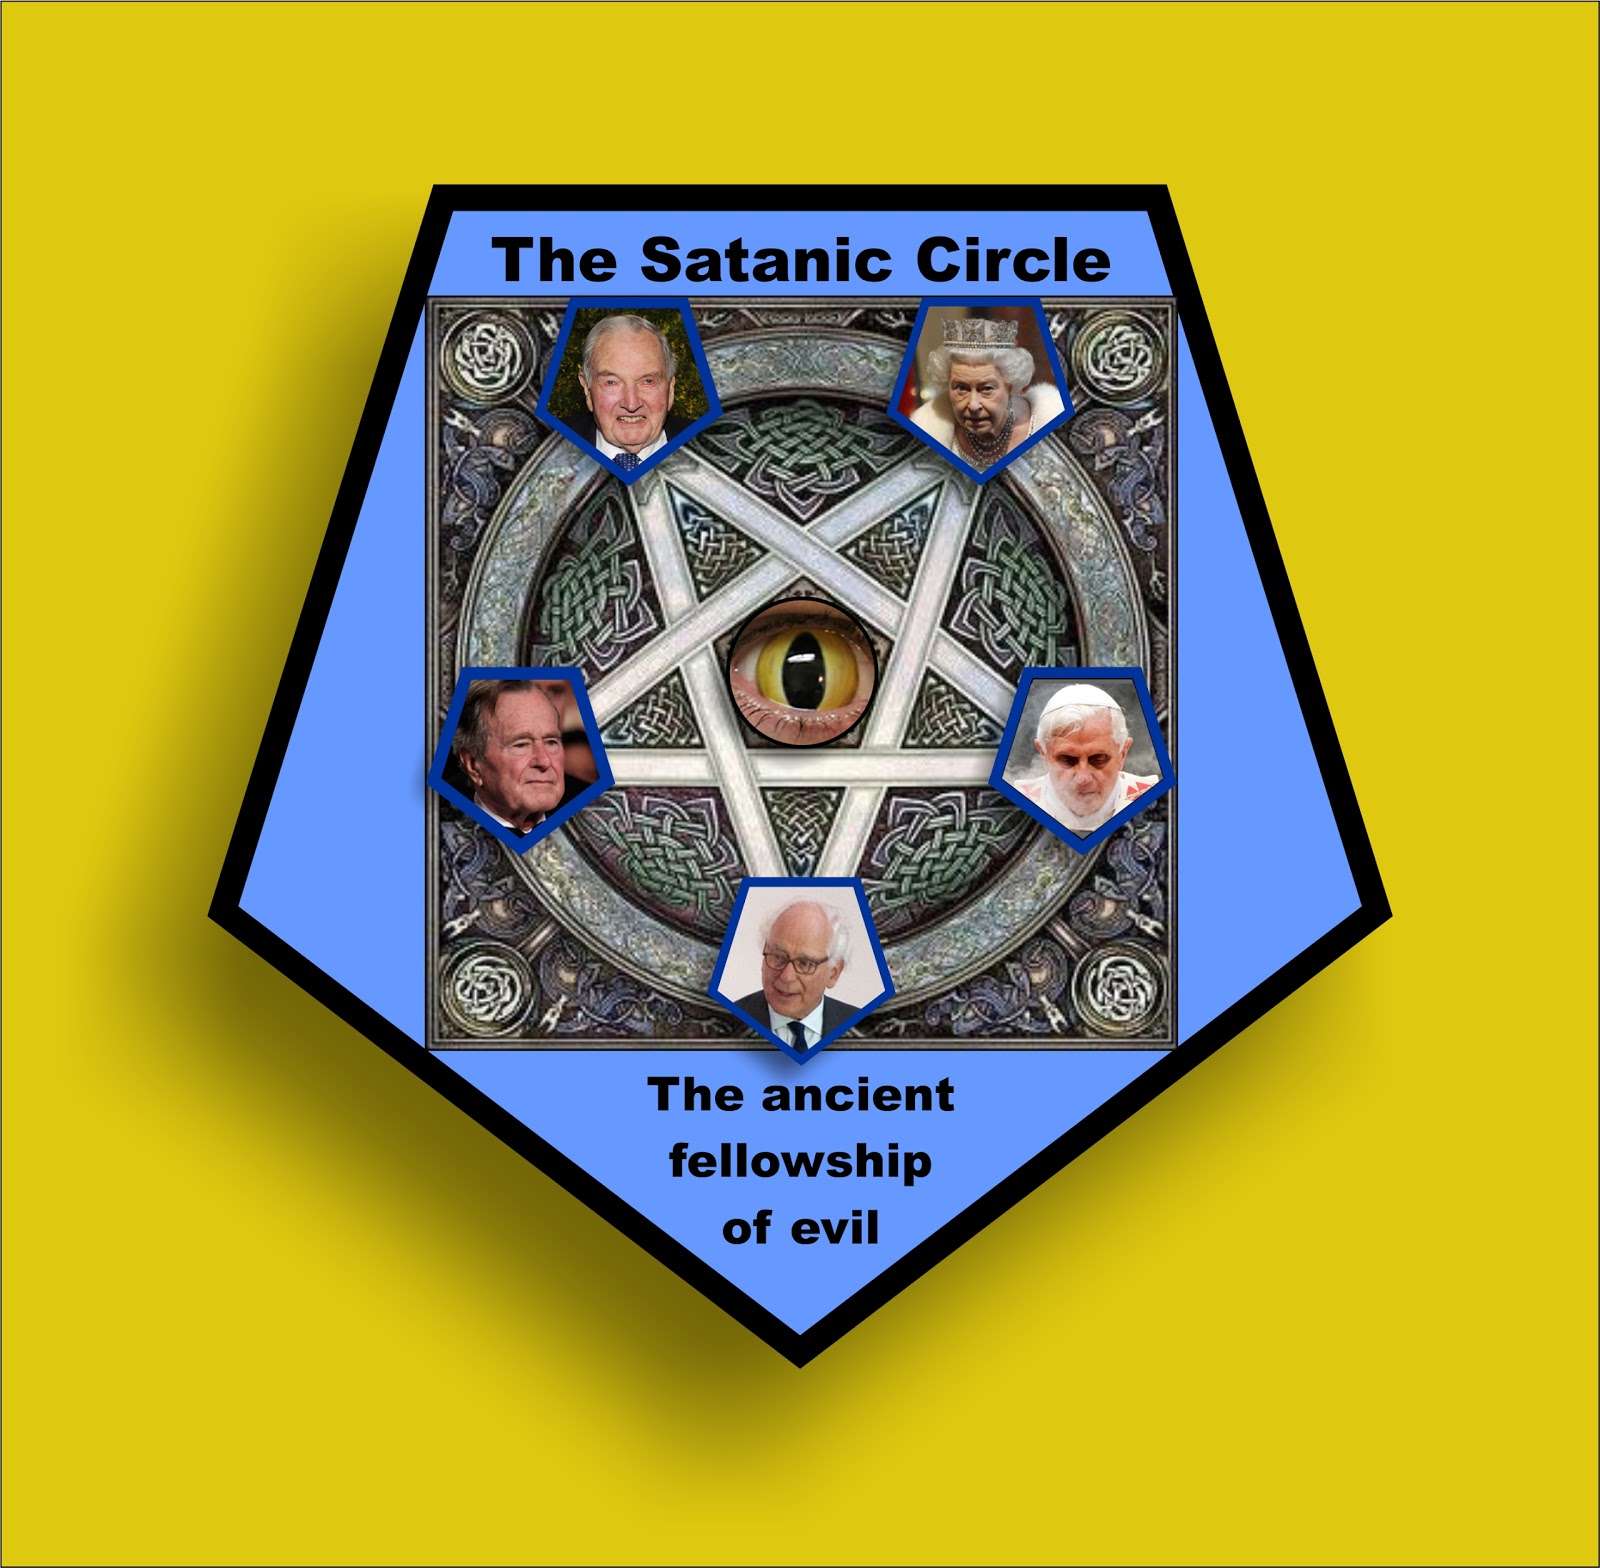 https://blogger.googleusercontent.com/img/b/R29vZ2xl/AVvXsEhwLTkUwd4v27g2FltY9jFFmtE6ql617mokoFPBkA4n7g4zFAFYTyuDR5fRivEajbVYzdfIbSaDHAue9sNFj6H7ogX6bwArGtwGL35nQv_CTvapSOMlAyGPemlguGiF15Tdf71-KFX7fw/s1600/Illuminati+bloodlines.+The+Satanic+Circle.+The+ancient+fellowship+of+evil.+%231ab.+(1).jpg?SSImageQuality=Full